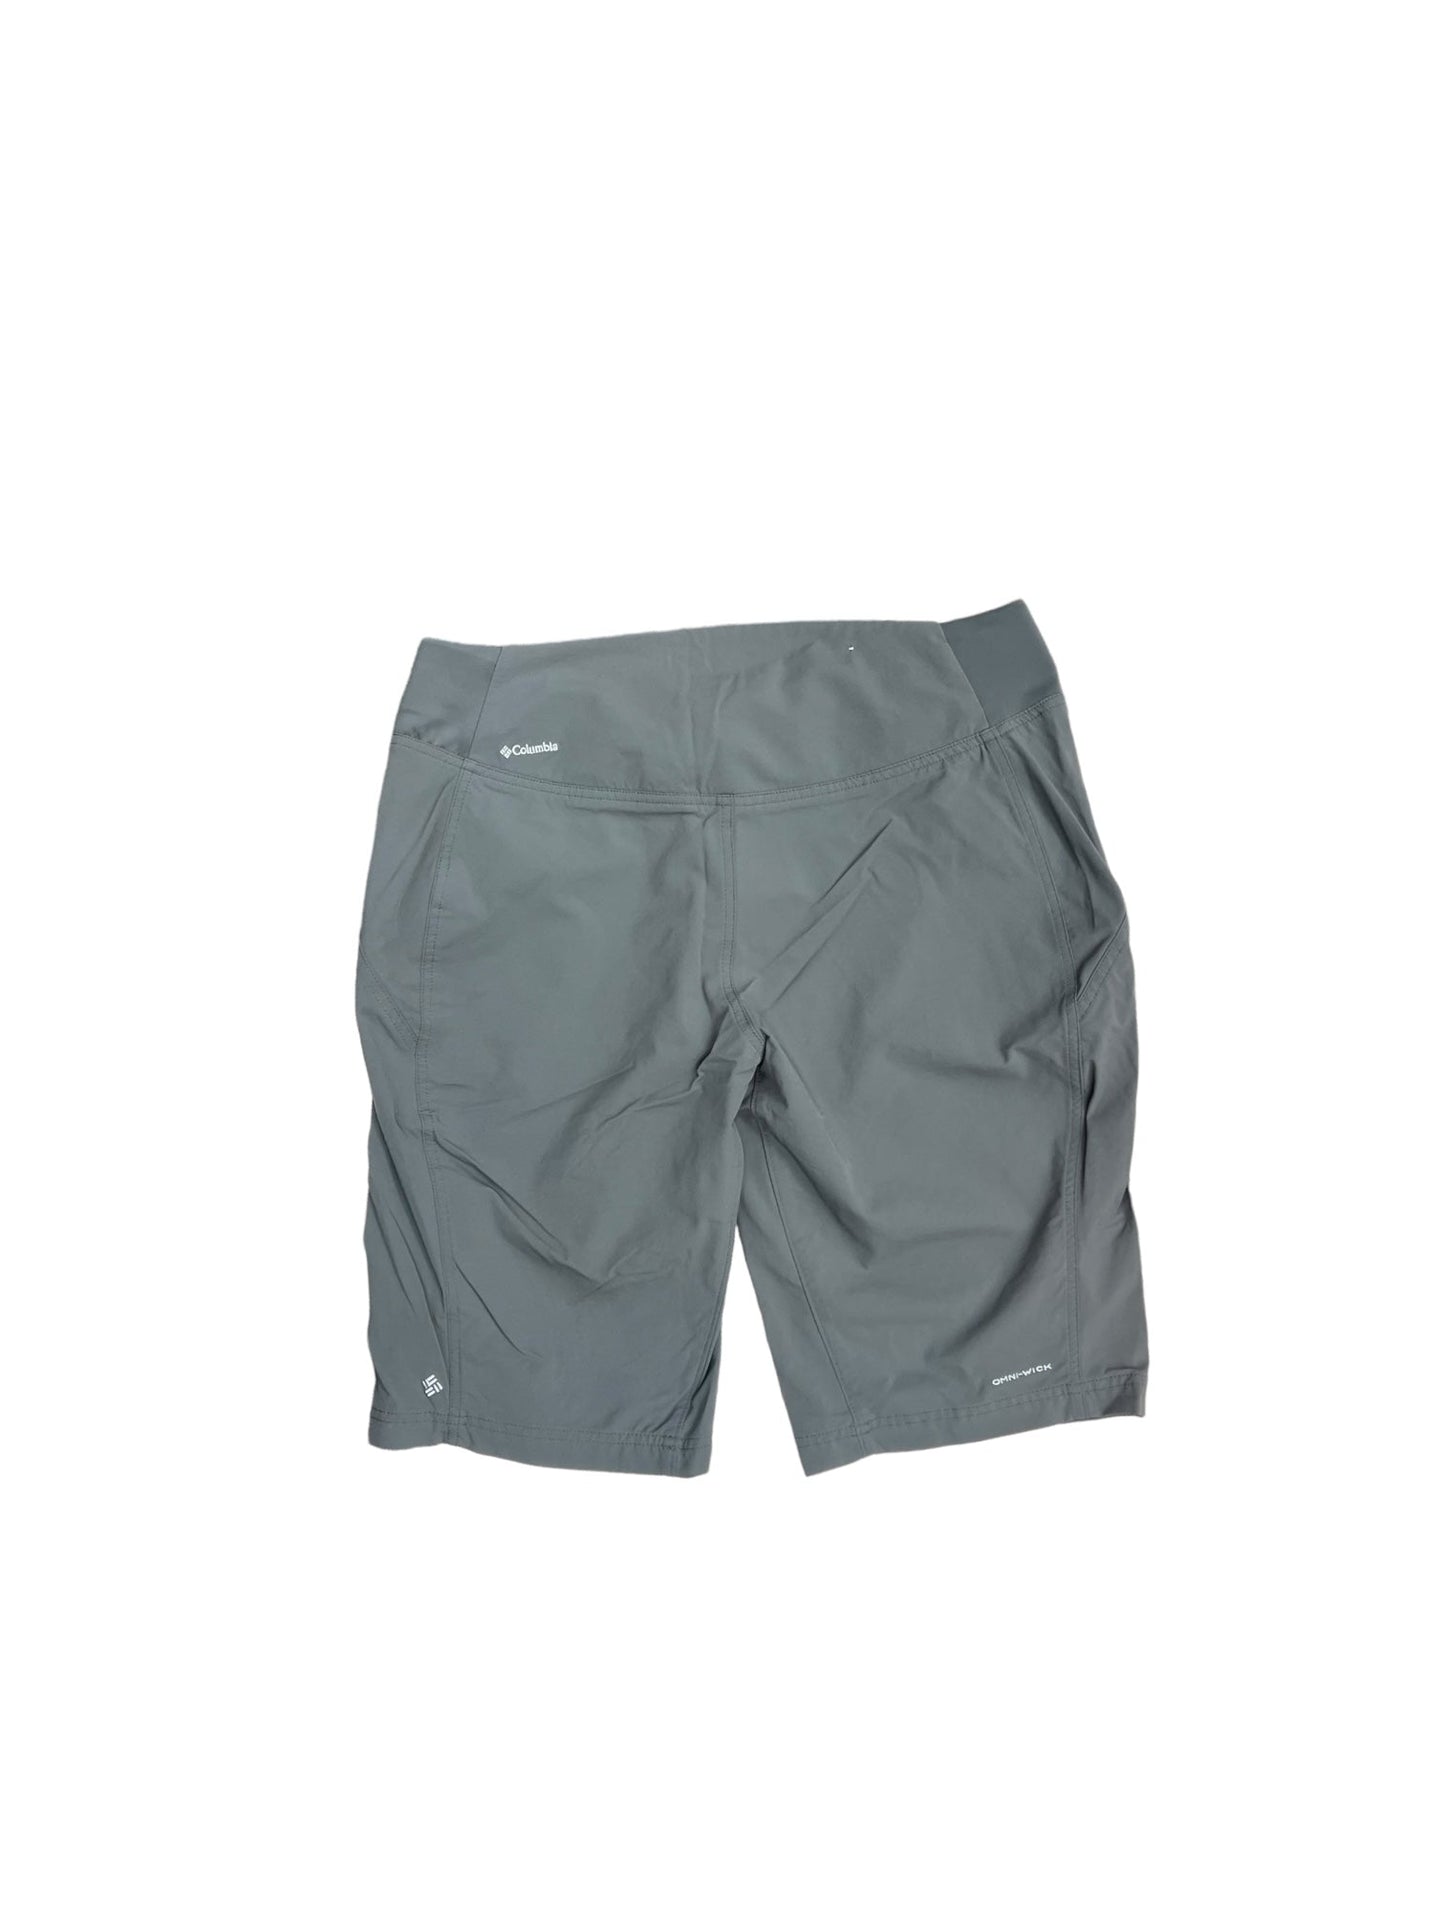 Grey Shorts Columbia, Size 14